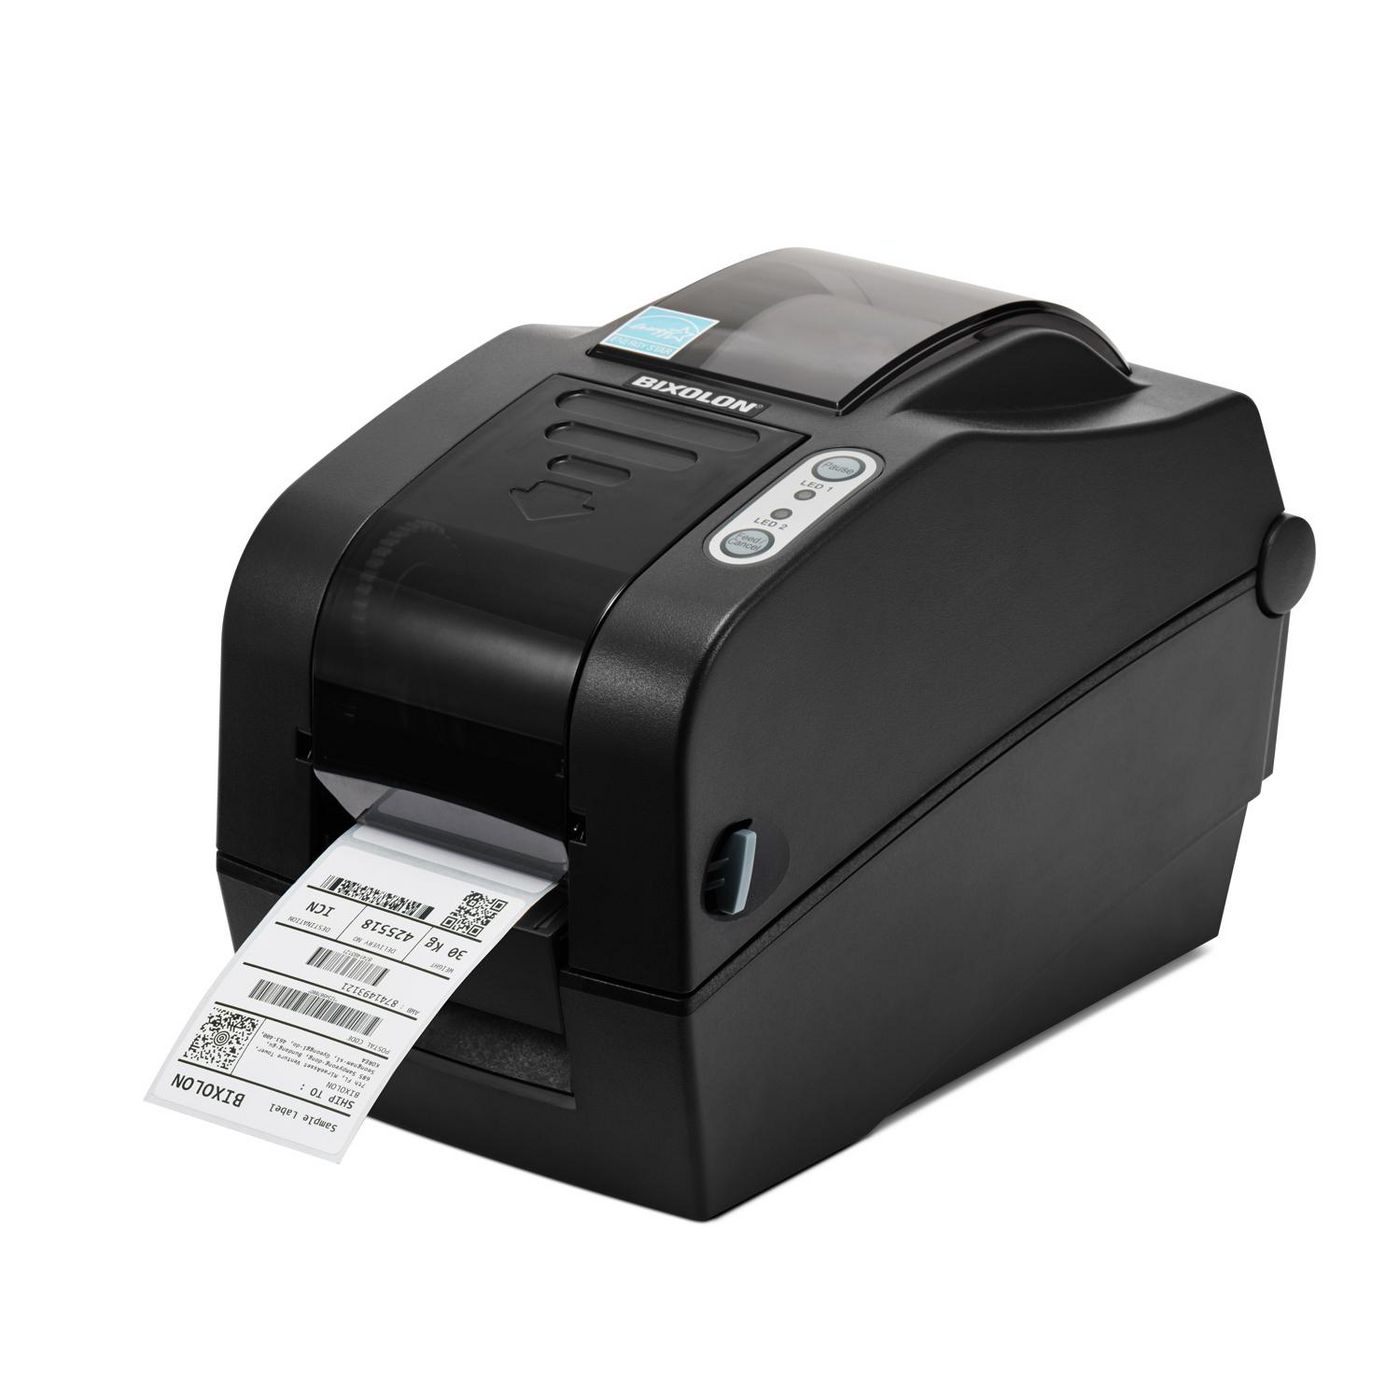 Slp-tx223g - Label Printer - Direct Thermal - USB / Serial / Parallel